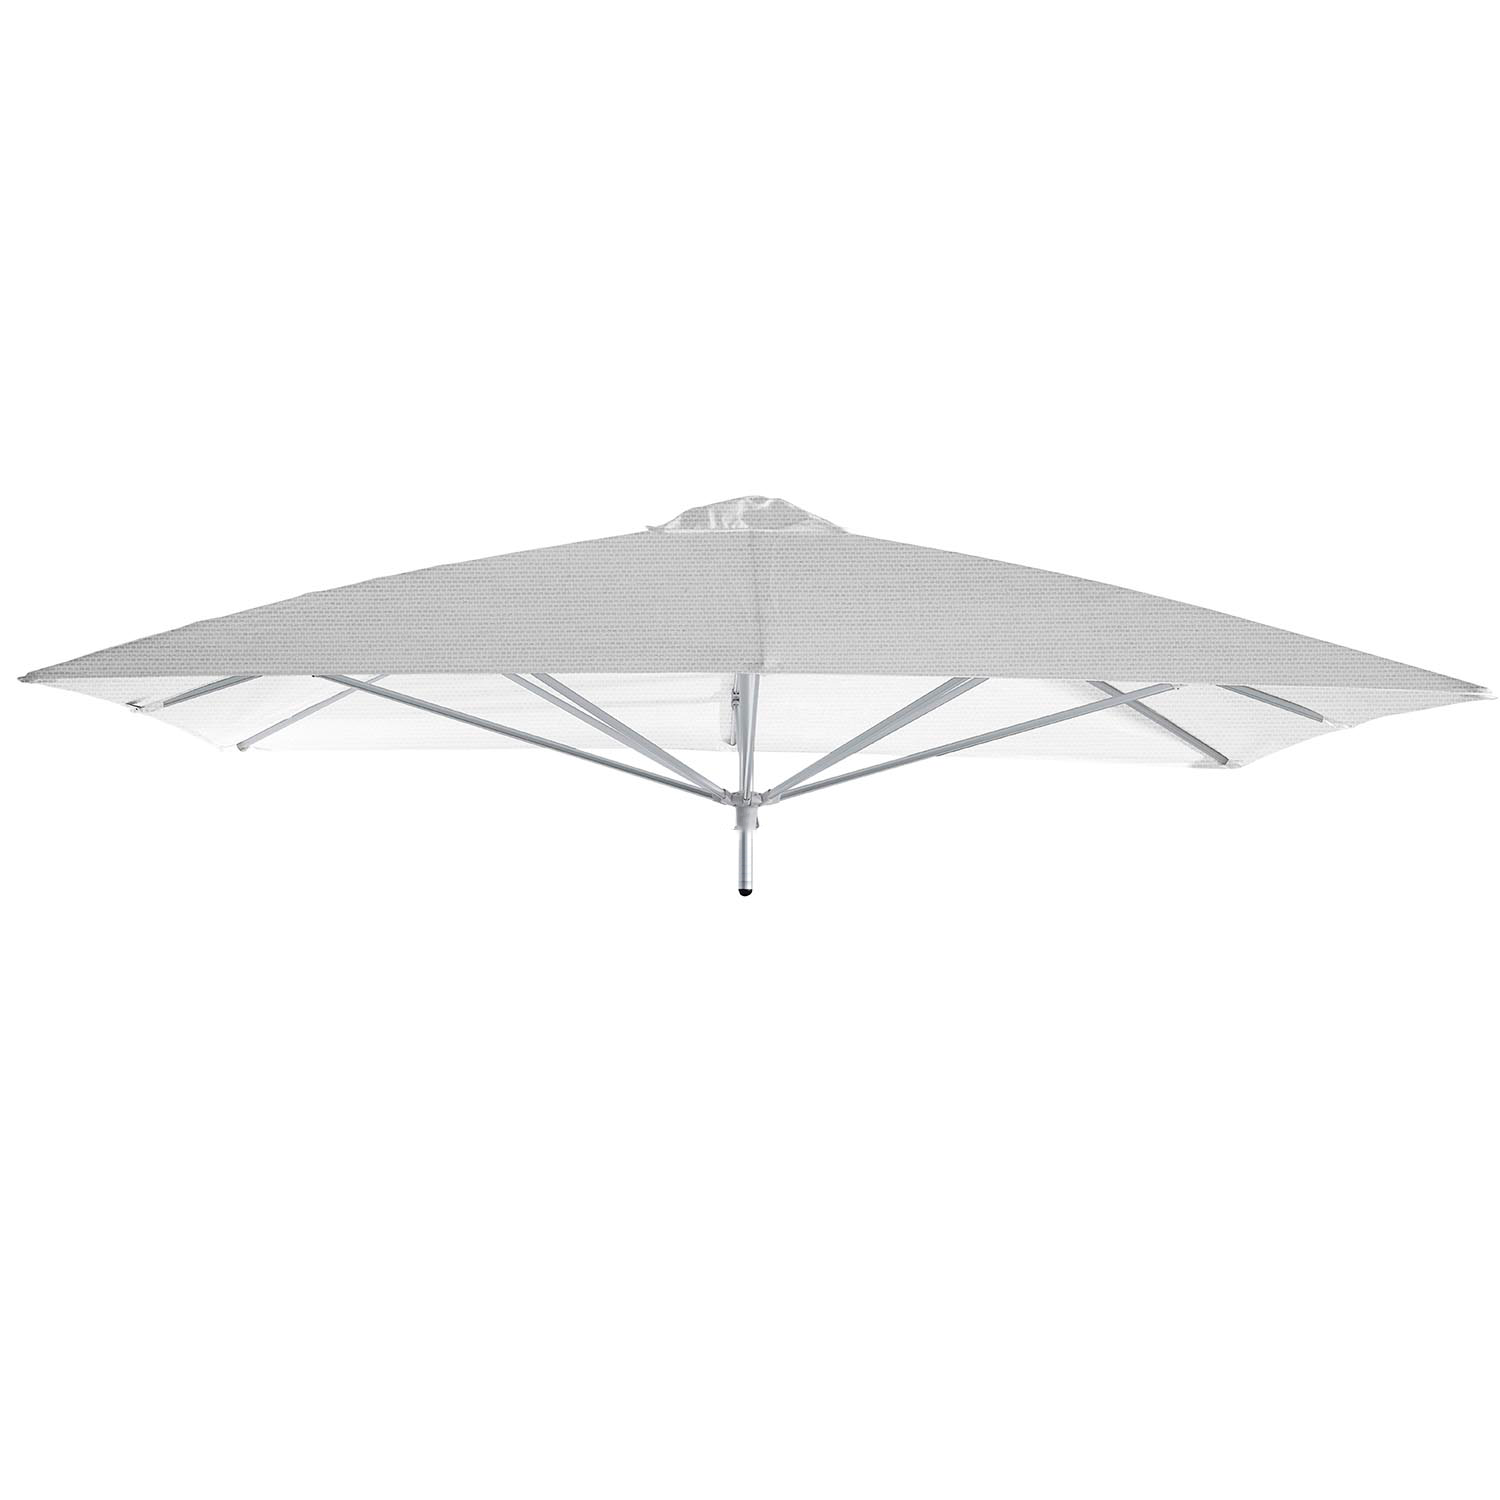 Paraflex Neo parasolkap 230x230cm - Sunbrella (Marble)